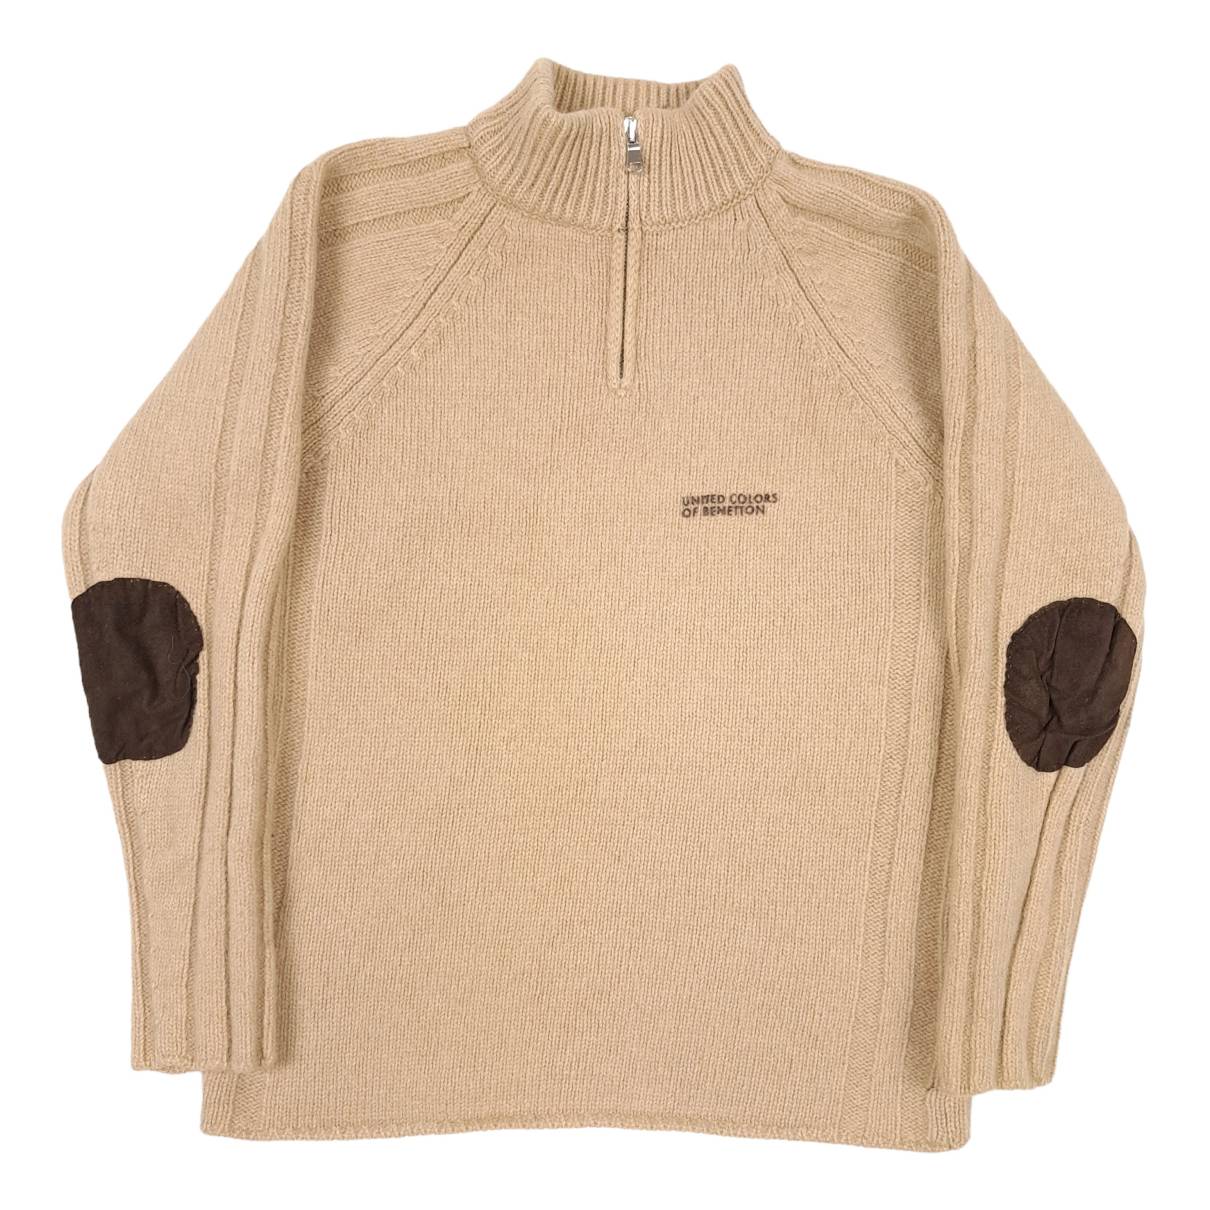 Wool sweatshirt UNITED COLOR OF BENETTON - Vintage